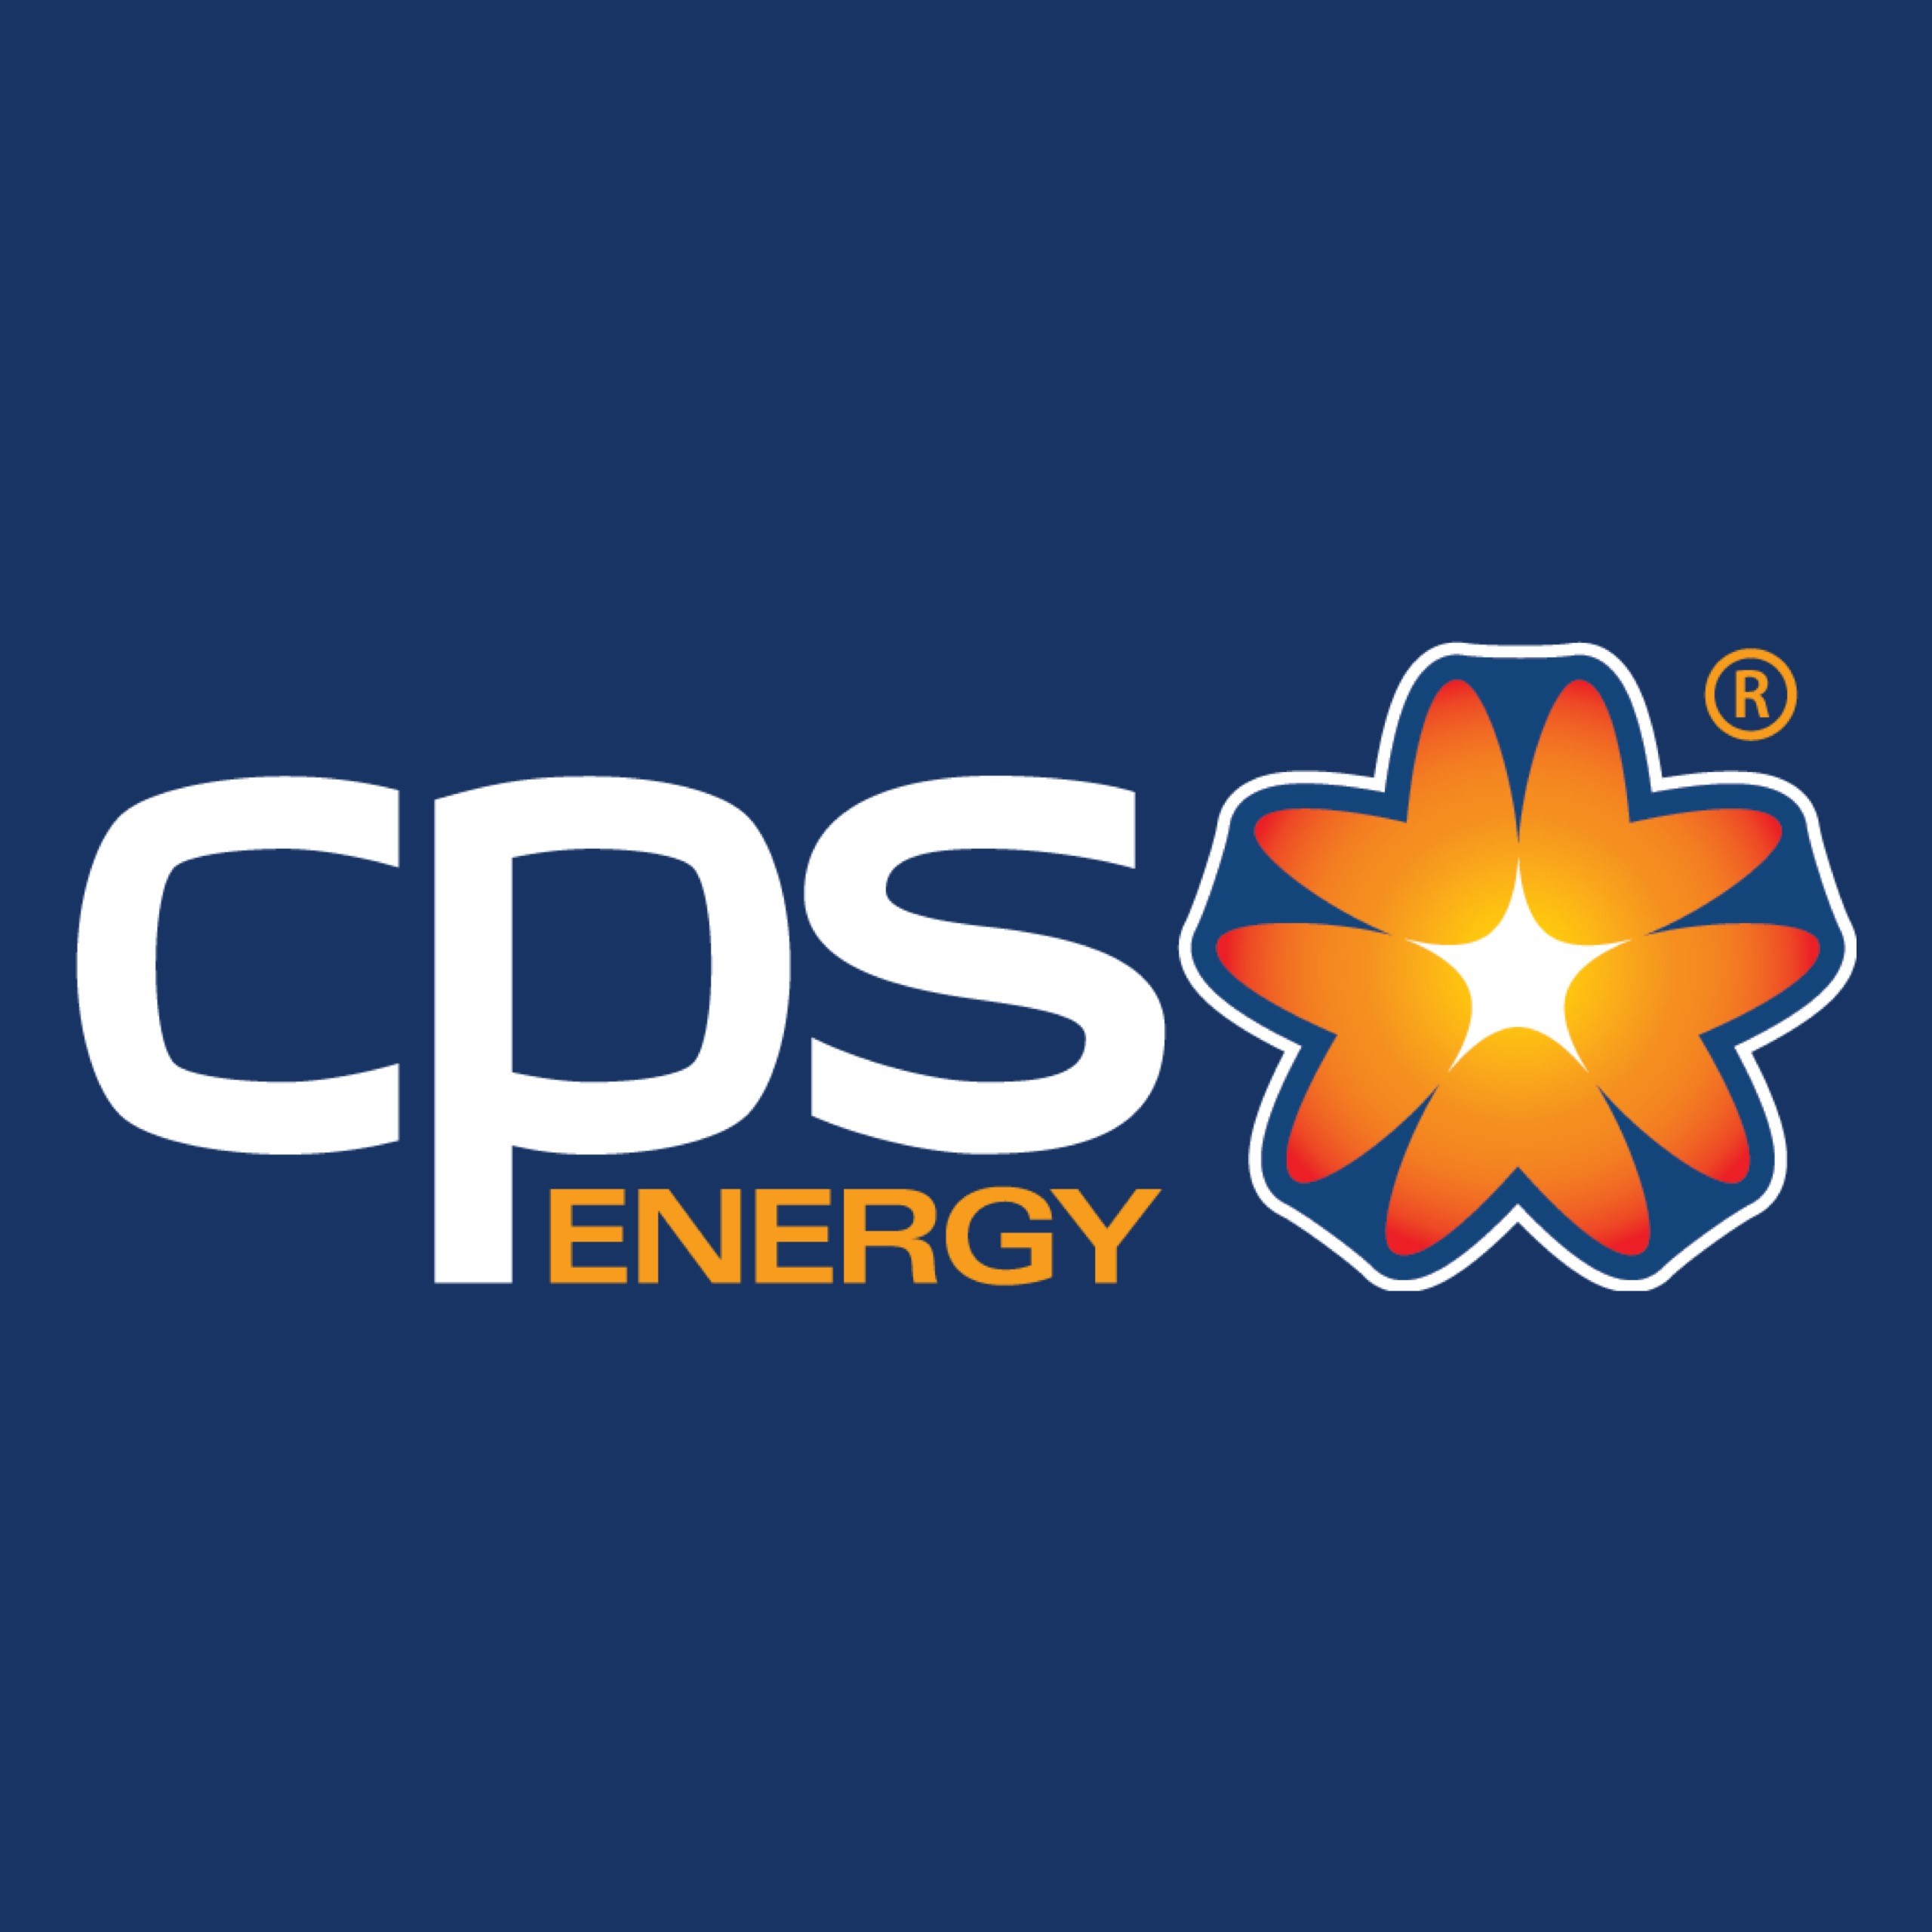 (Image) CPS Energy logo on blue